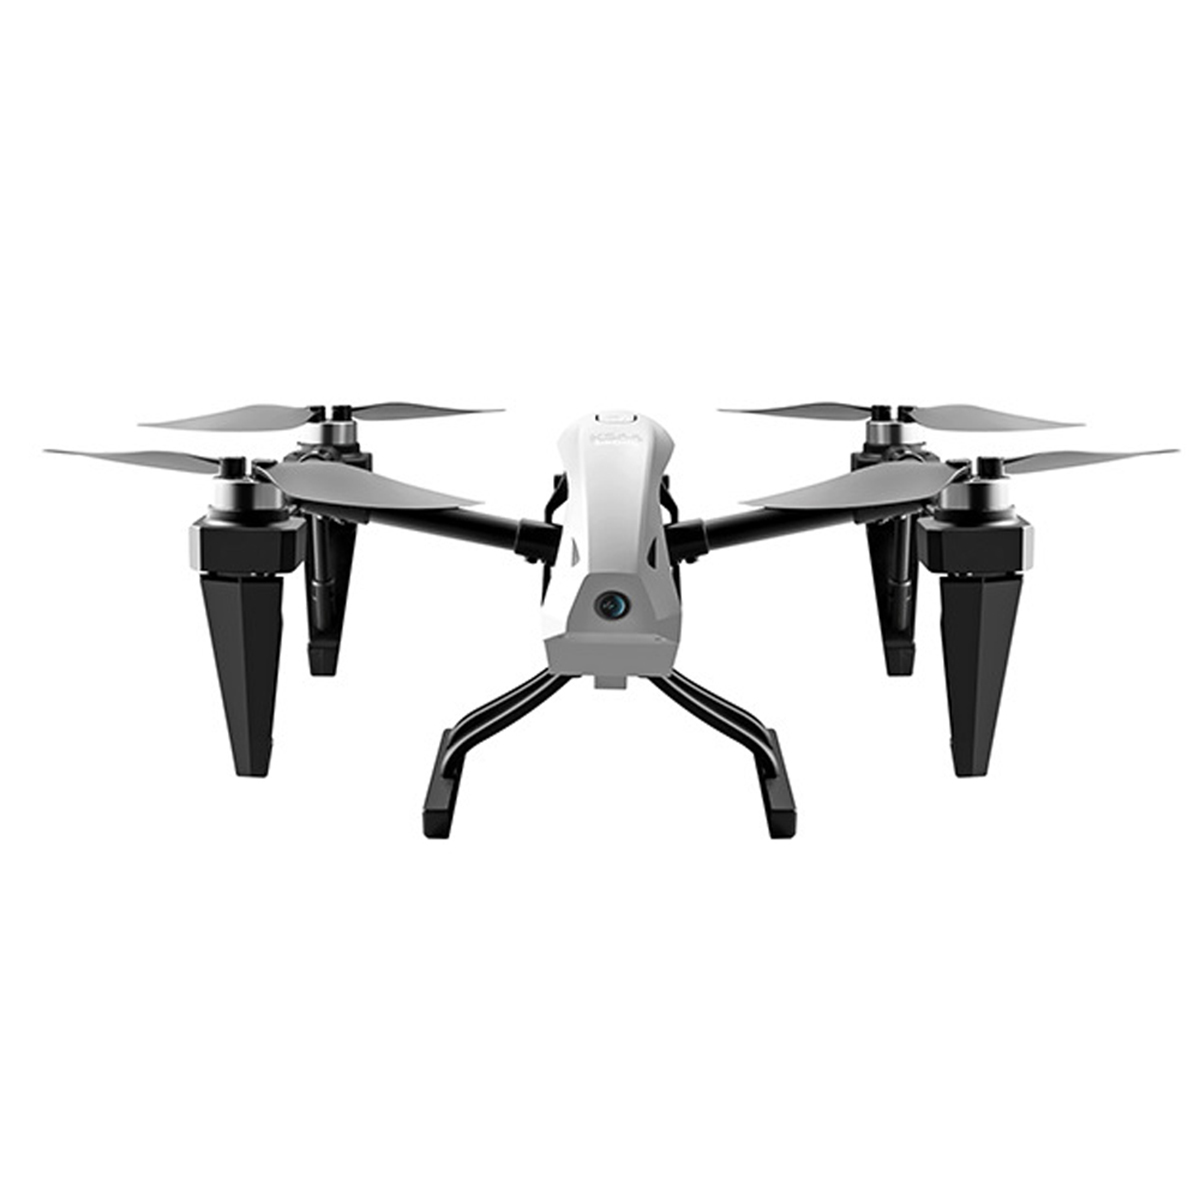 Spielzeugflugzeug Alloy Drohne weiß RC Kamera Brushless Drohne, BYTELIKE HD Aerial Quadcopter